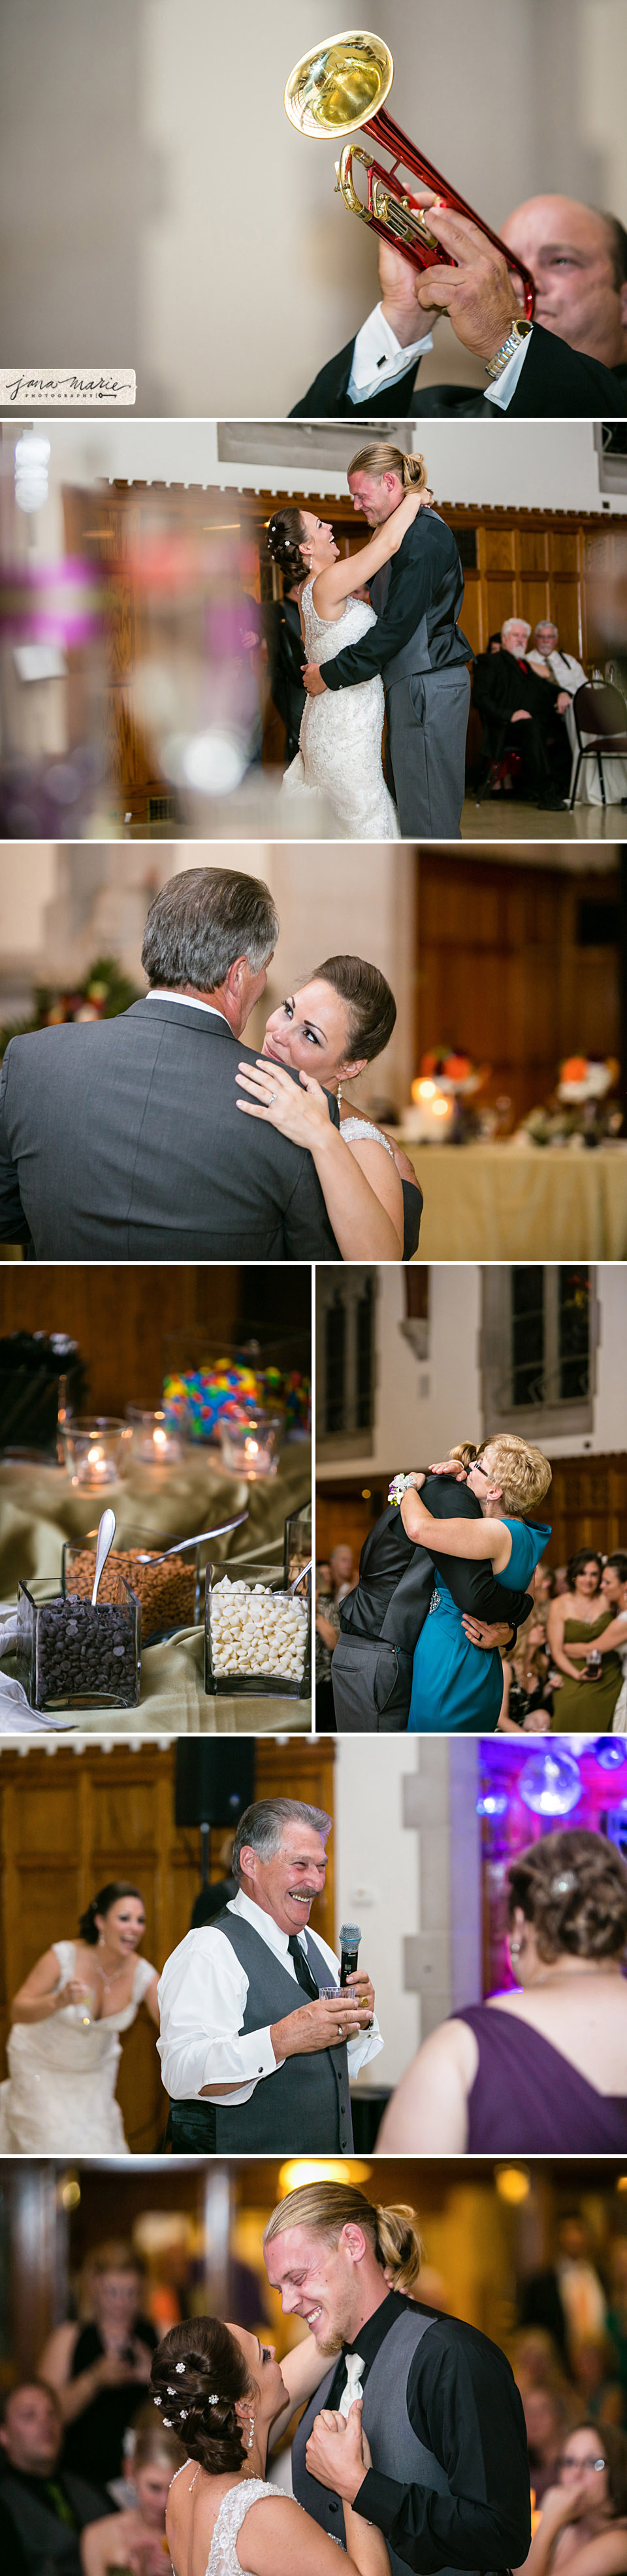 Midwest wedding photographer, First dance, candy table, reception ideas, decor, Jana Marler